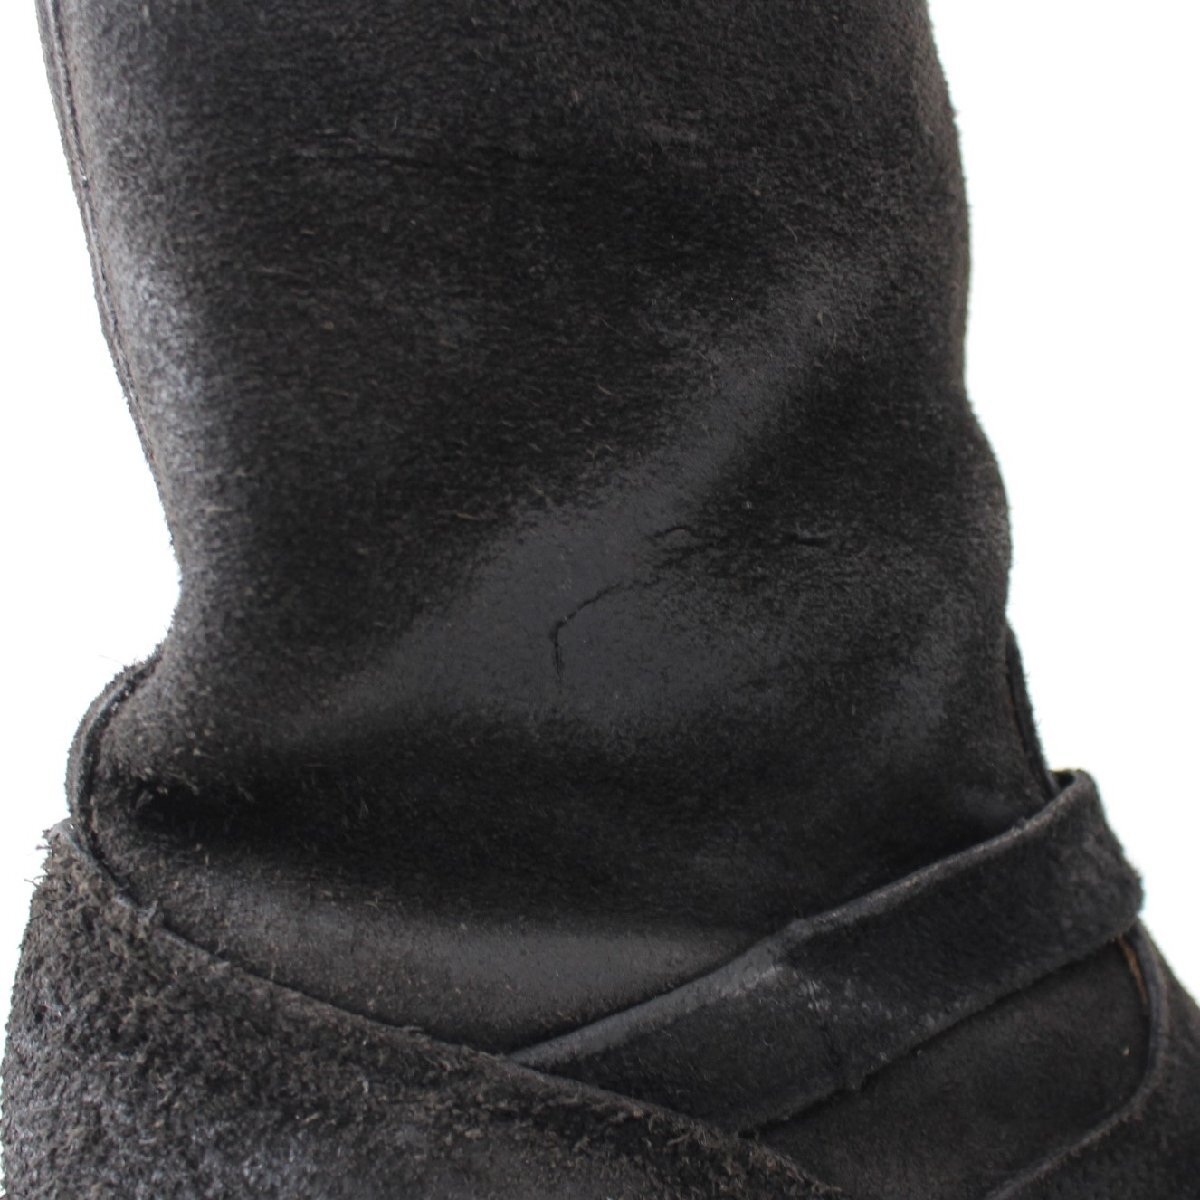  Chippewa 09s engineer boots 91069 rough out print black tag USA made steel tu black US8 1/2 E (w-5420317)